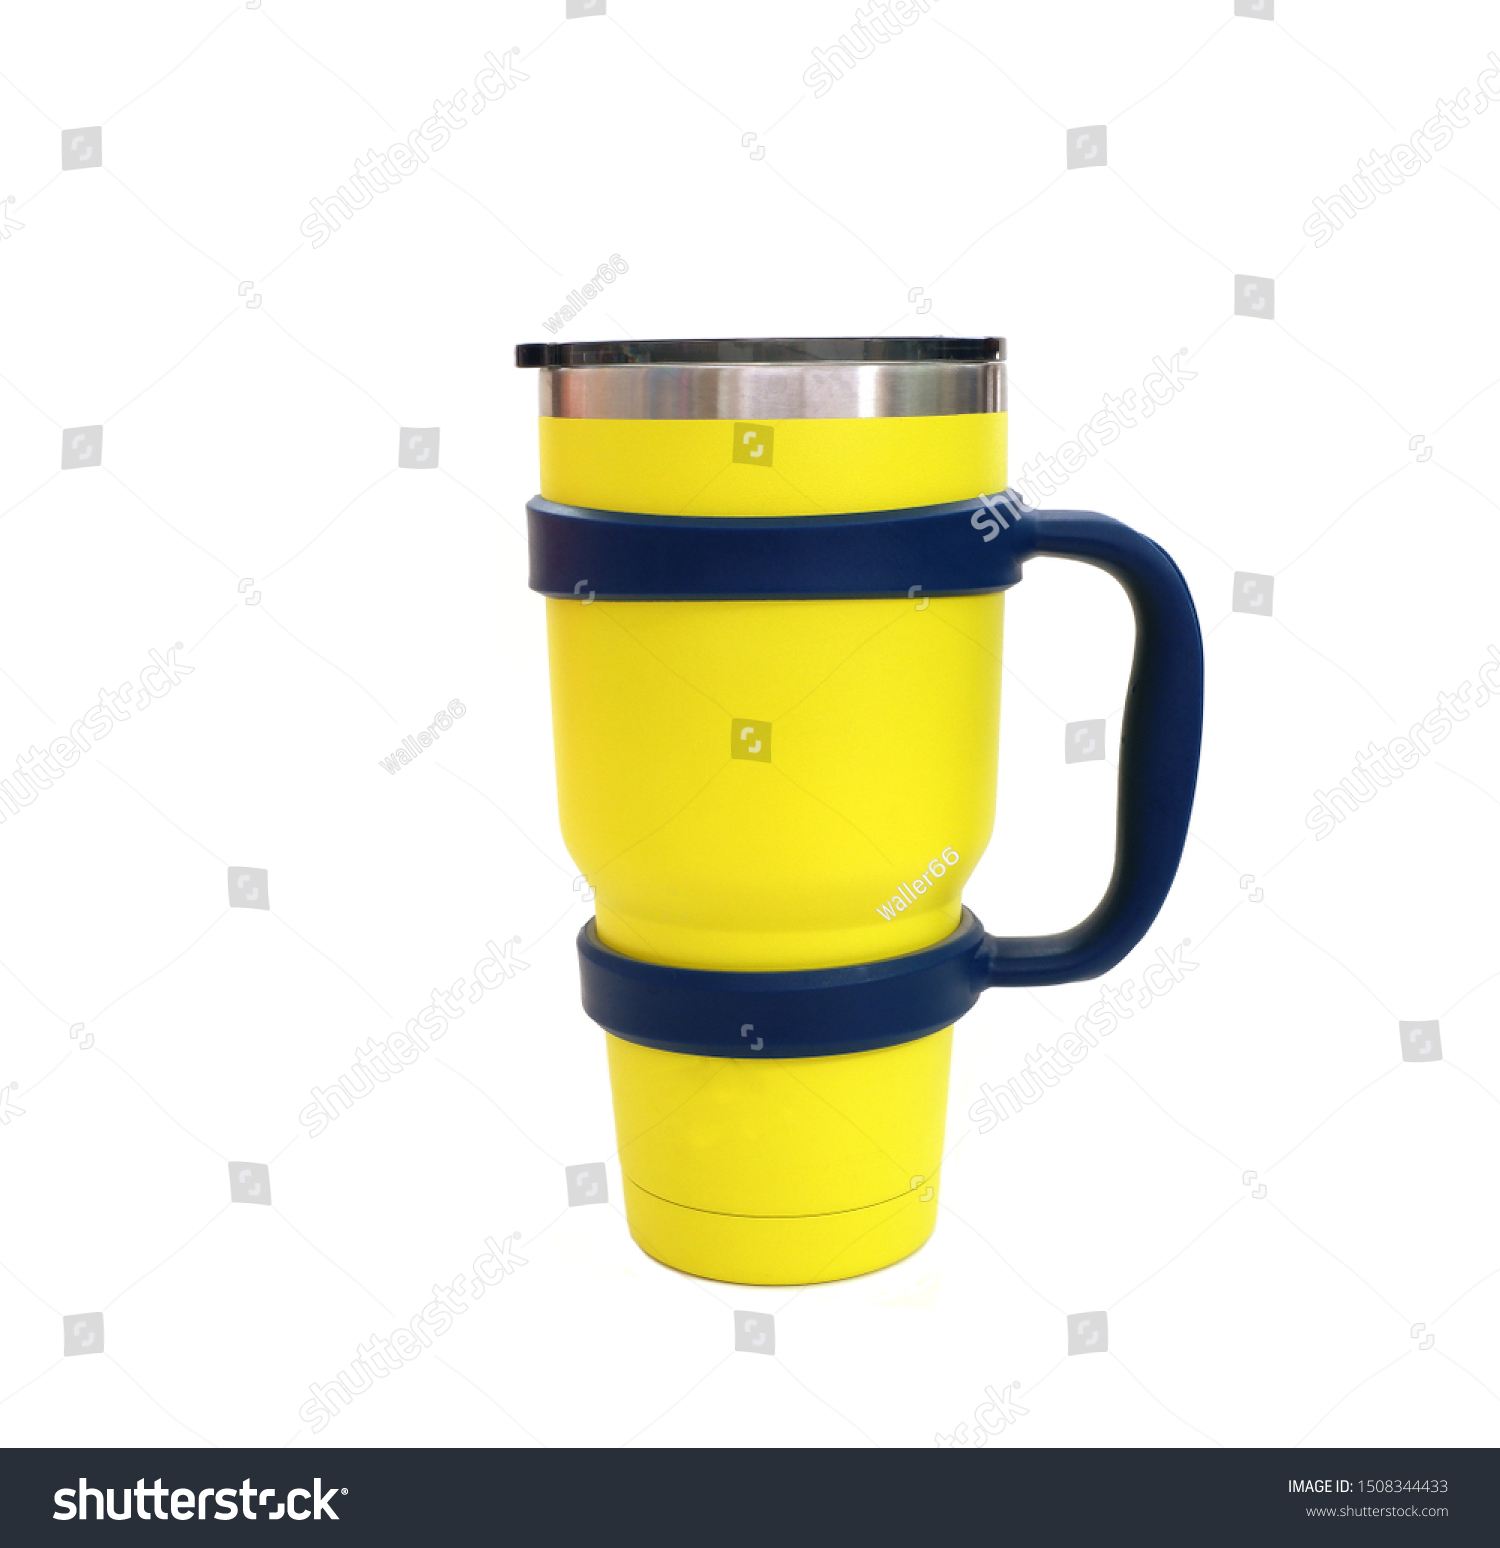 yellow yeti cup